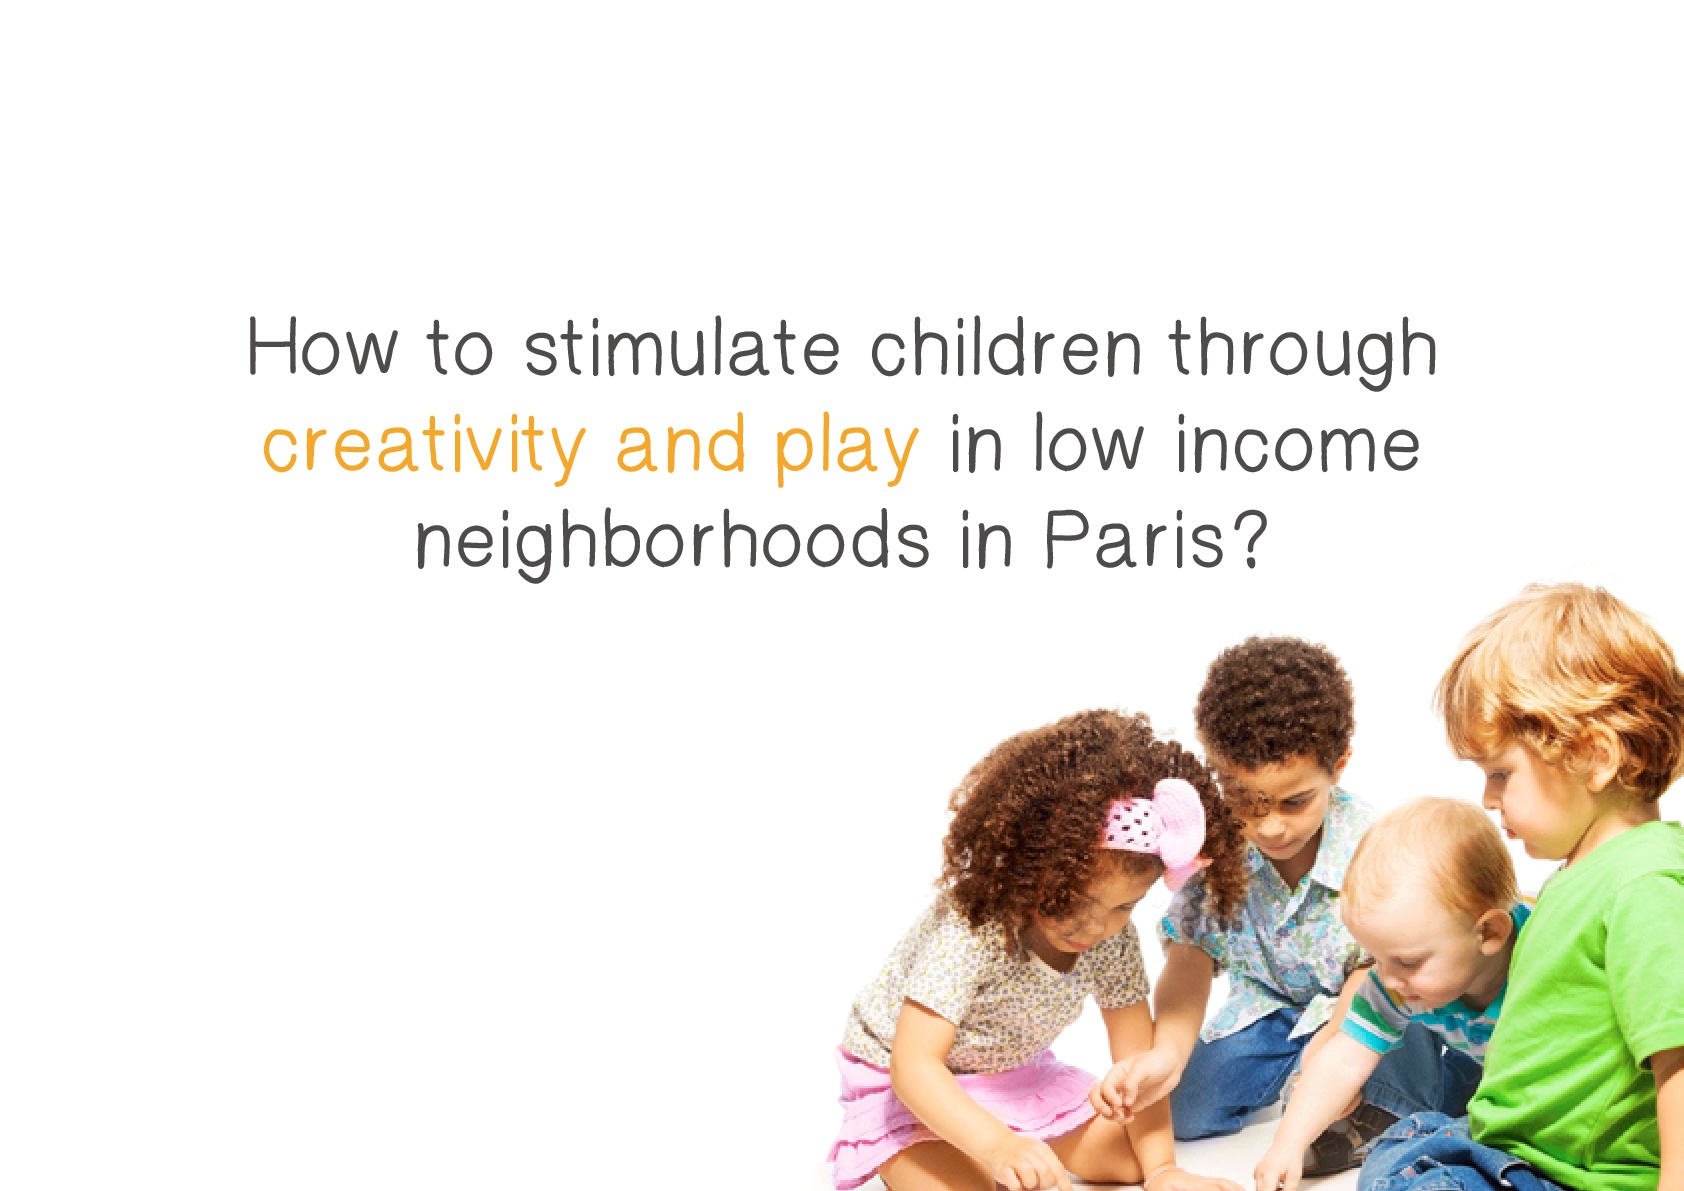 How we stimulate children through creativity & play